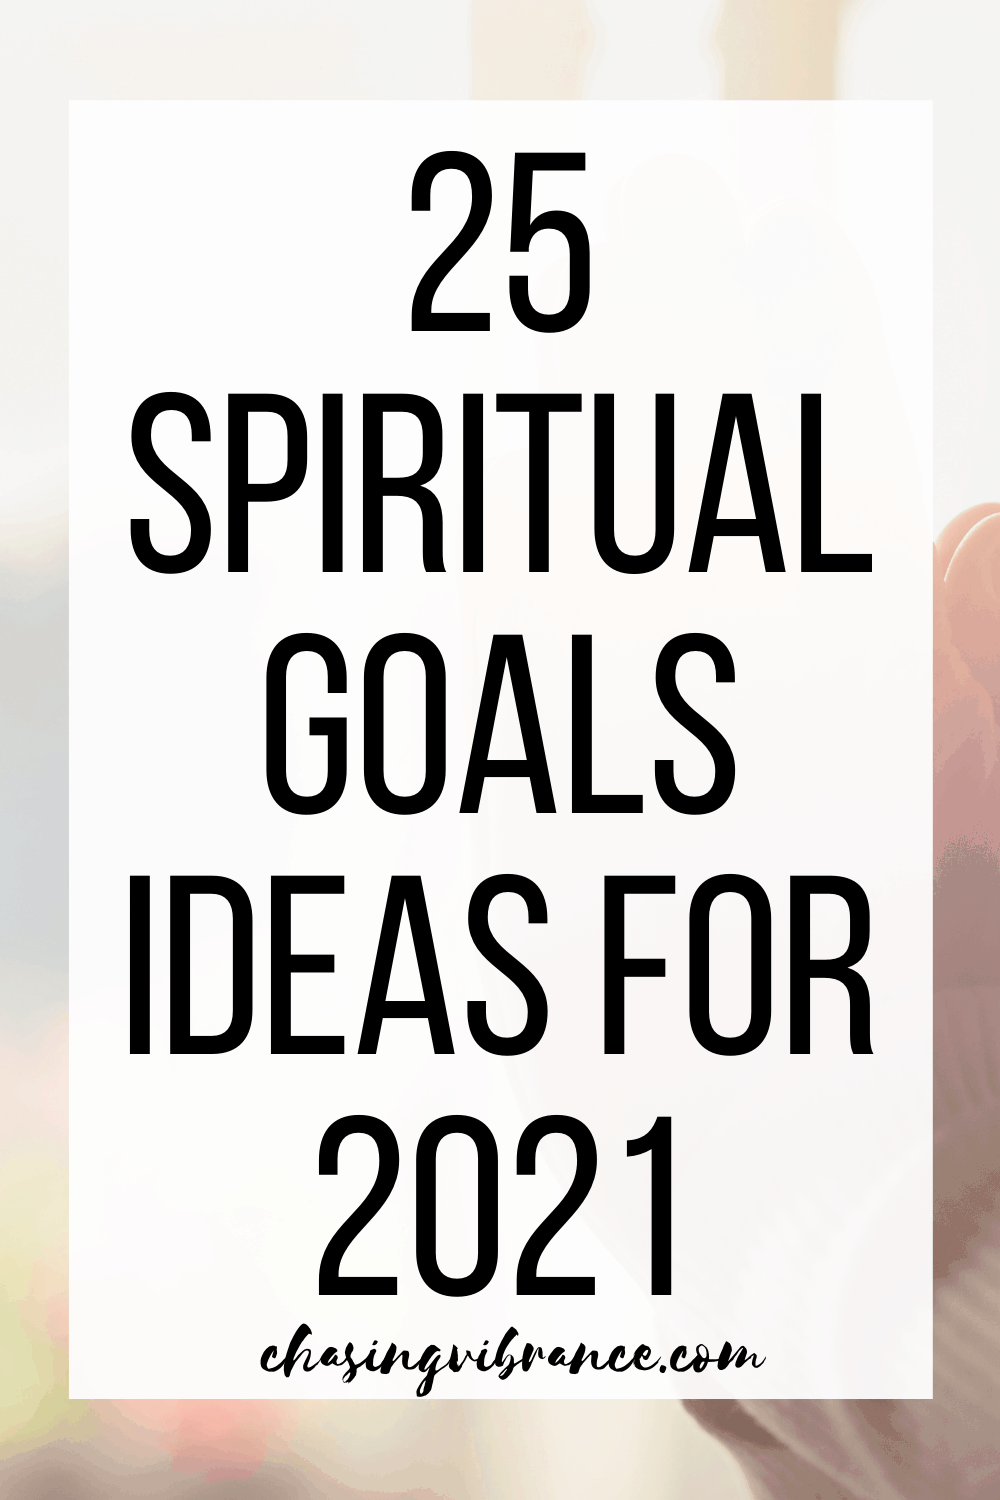 Choosing Your Spiritual Goals for 2022